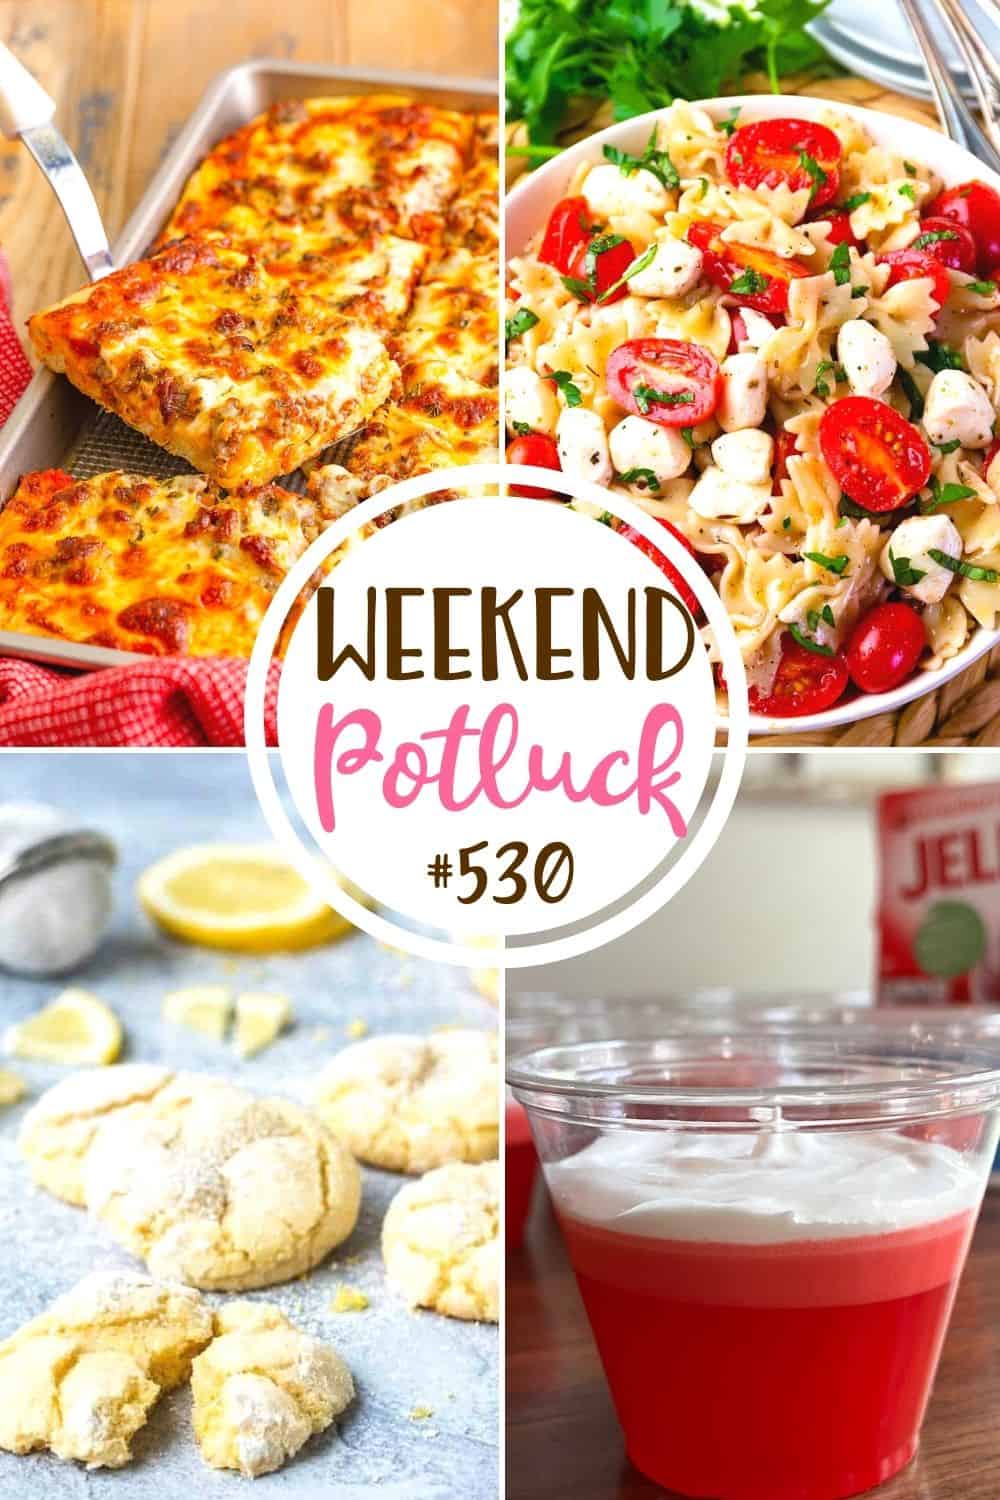 Weekend Potluck featured recipes: Lemon Crinkle Cookies, Sheet Pan Pizza, Caprese Pasta Salad, Copycat Jell-O 1-2-3 Layered Dessert